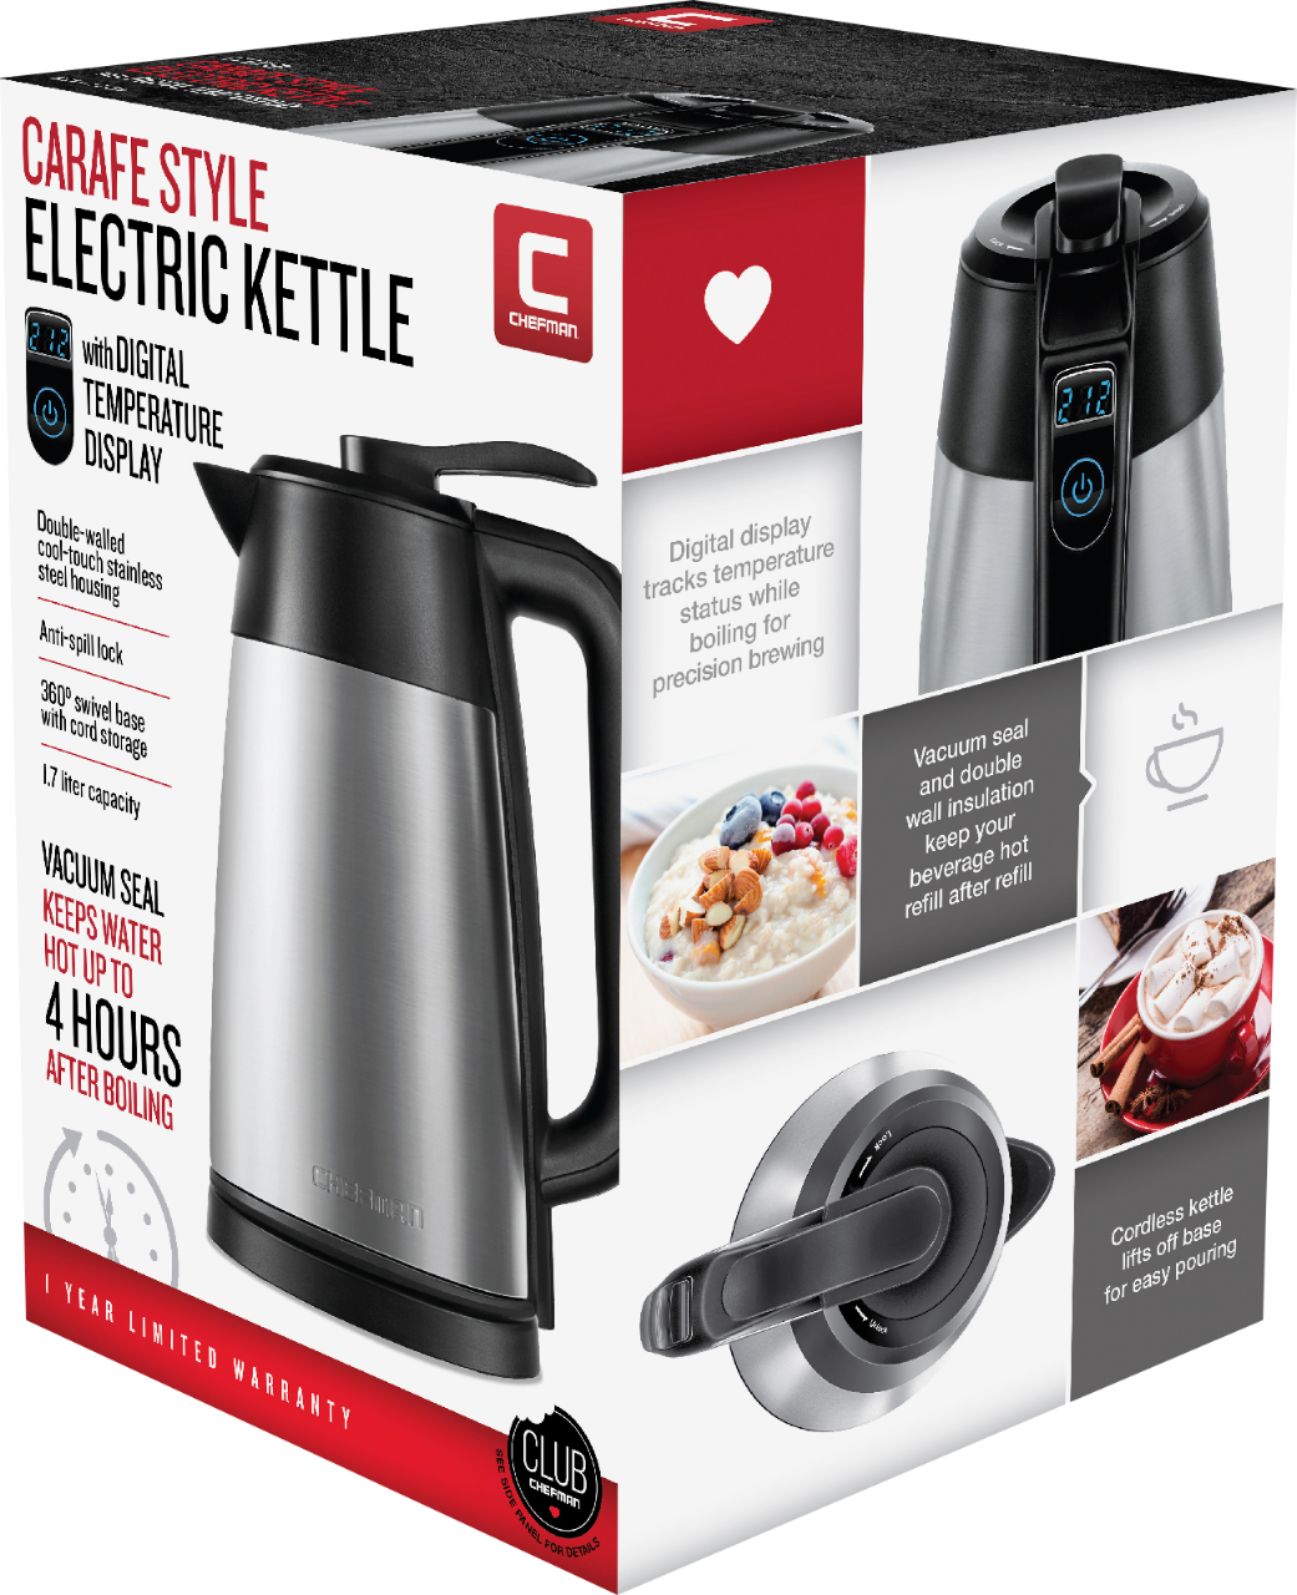 Best Buy: Chefman 1.7 Liter Electric Glass Tea Kettle w/ Auto Shut-Off  Black RJ11-17-GOPP